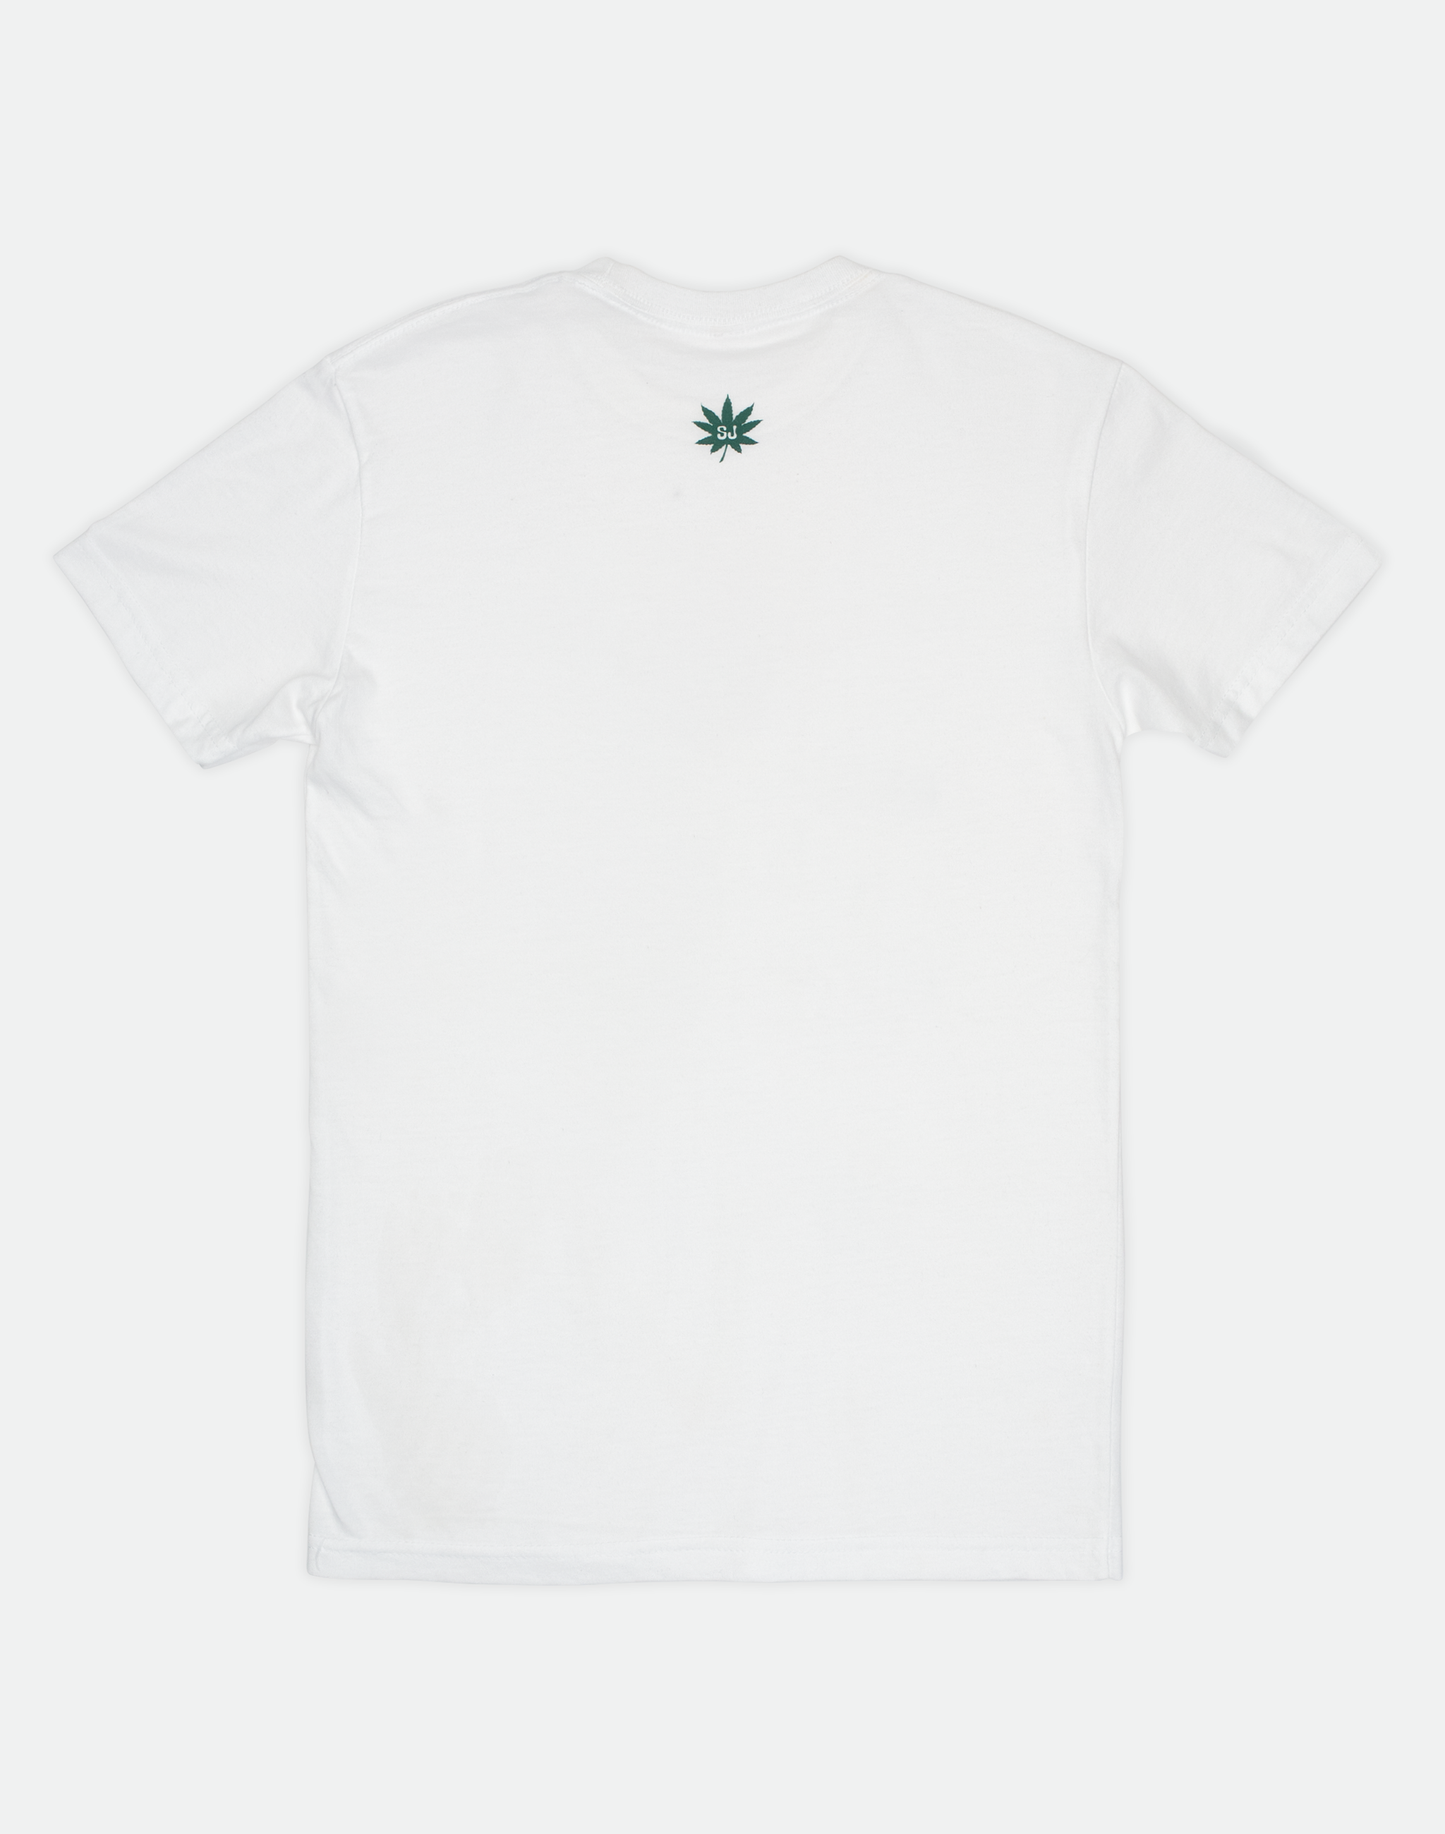 Golf & Ganja Distressed Unisex T-Shirt SwingJuice